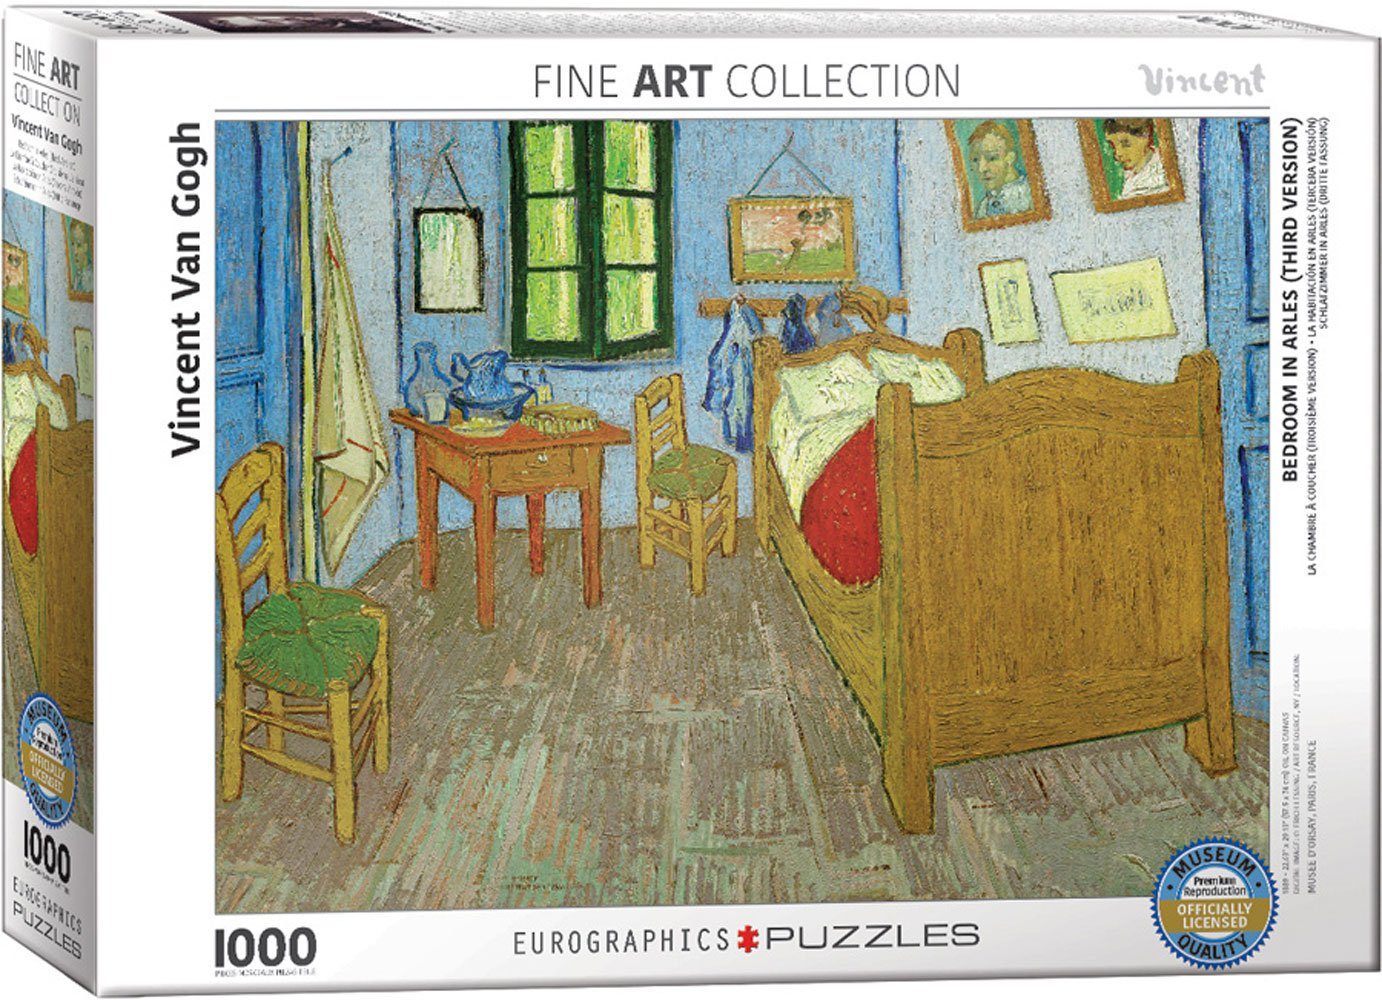 empireposter Puzzle Van Gogh - Vincents Schlafzimmer in Arles - 1000 Teile Puzzle im Format 68x48 cm, Puzzleteile